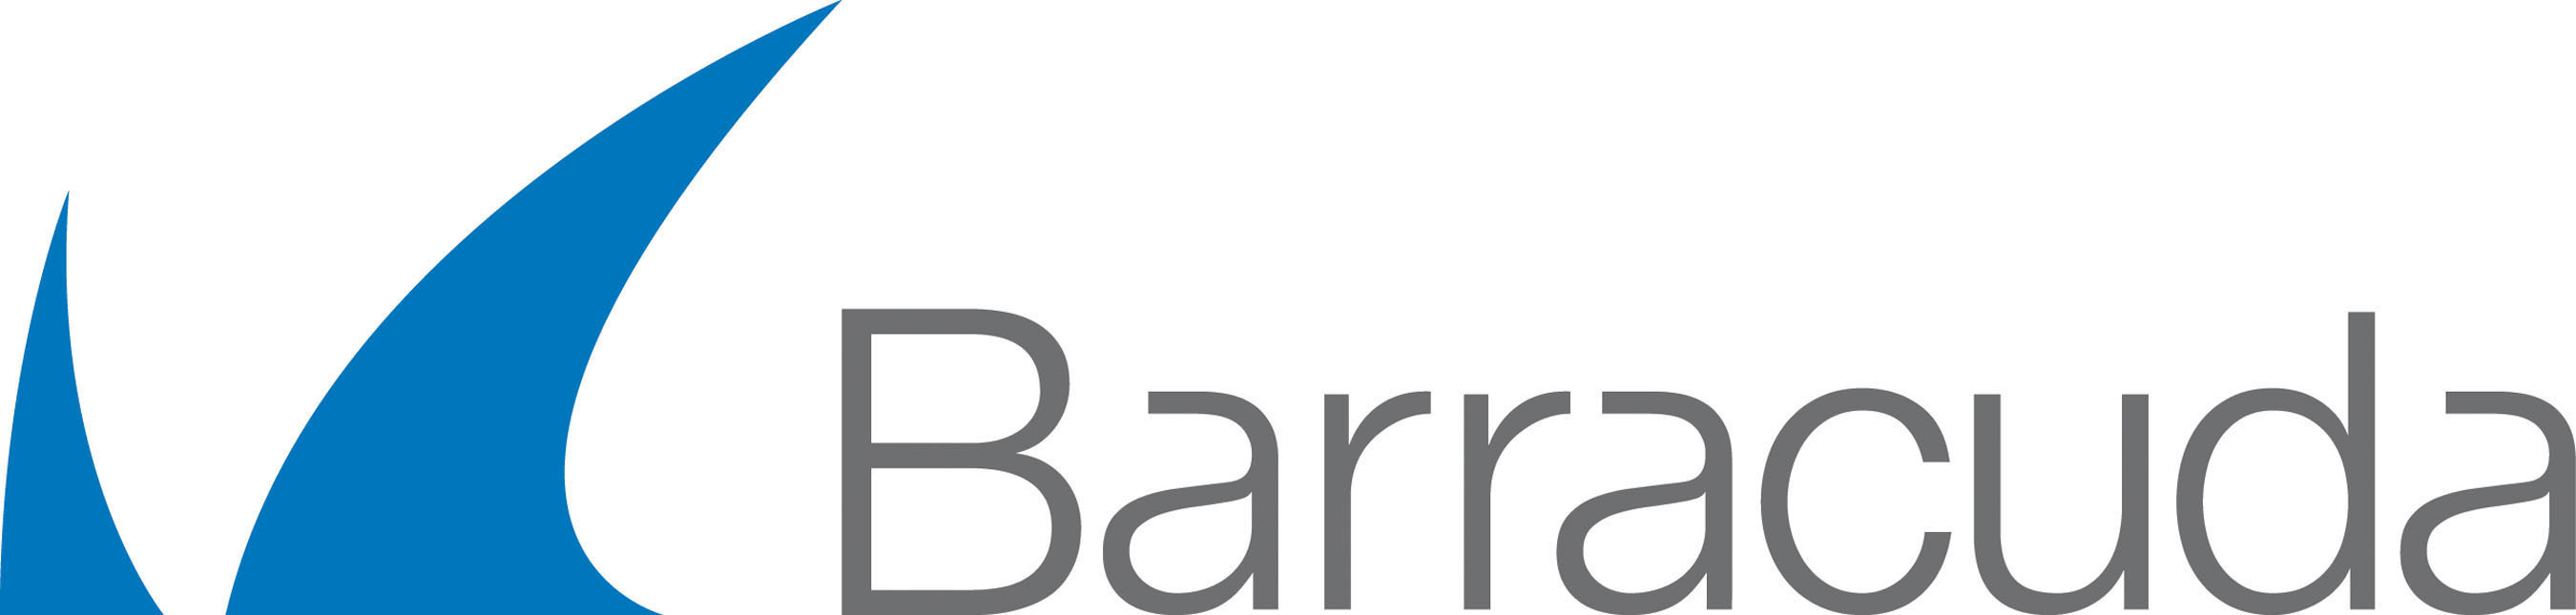 Barracuda Usb Modem (3G/Umts) For Firewall Secure Connector Models SC1